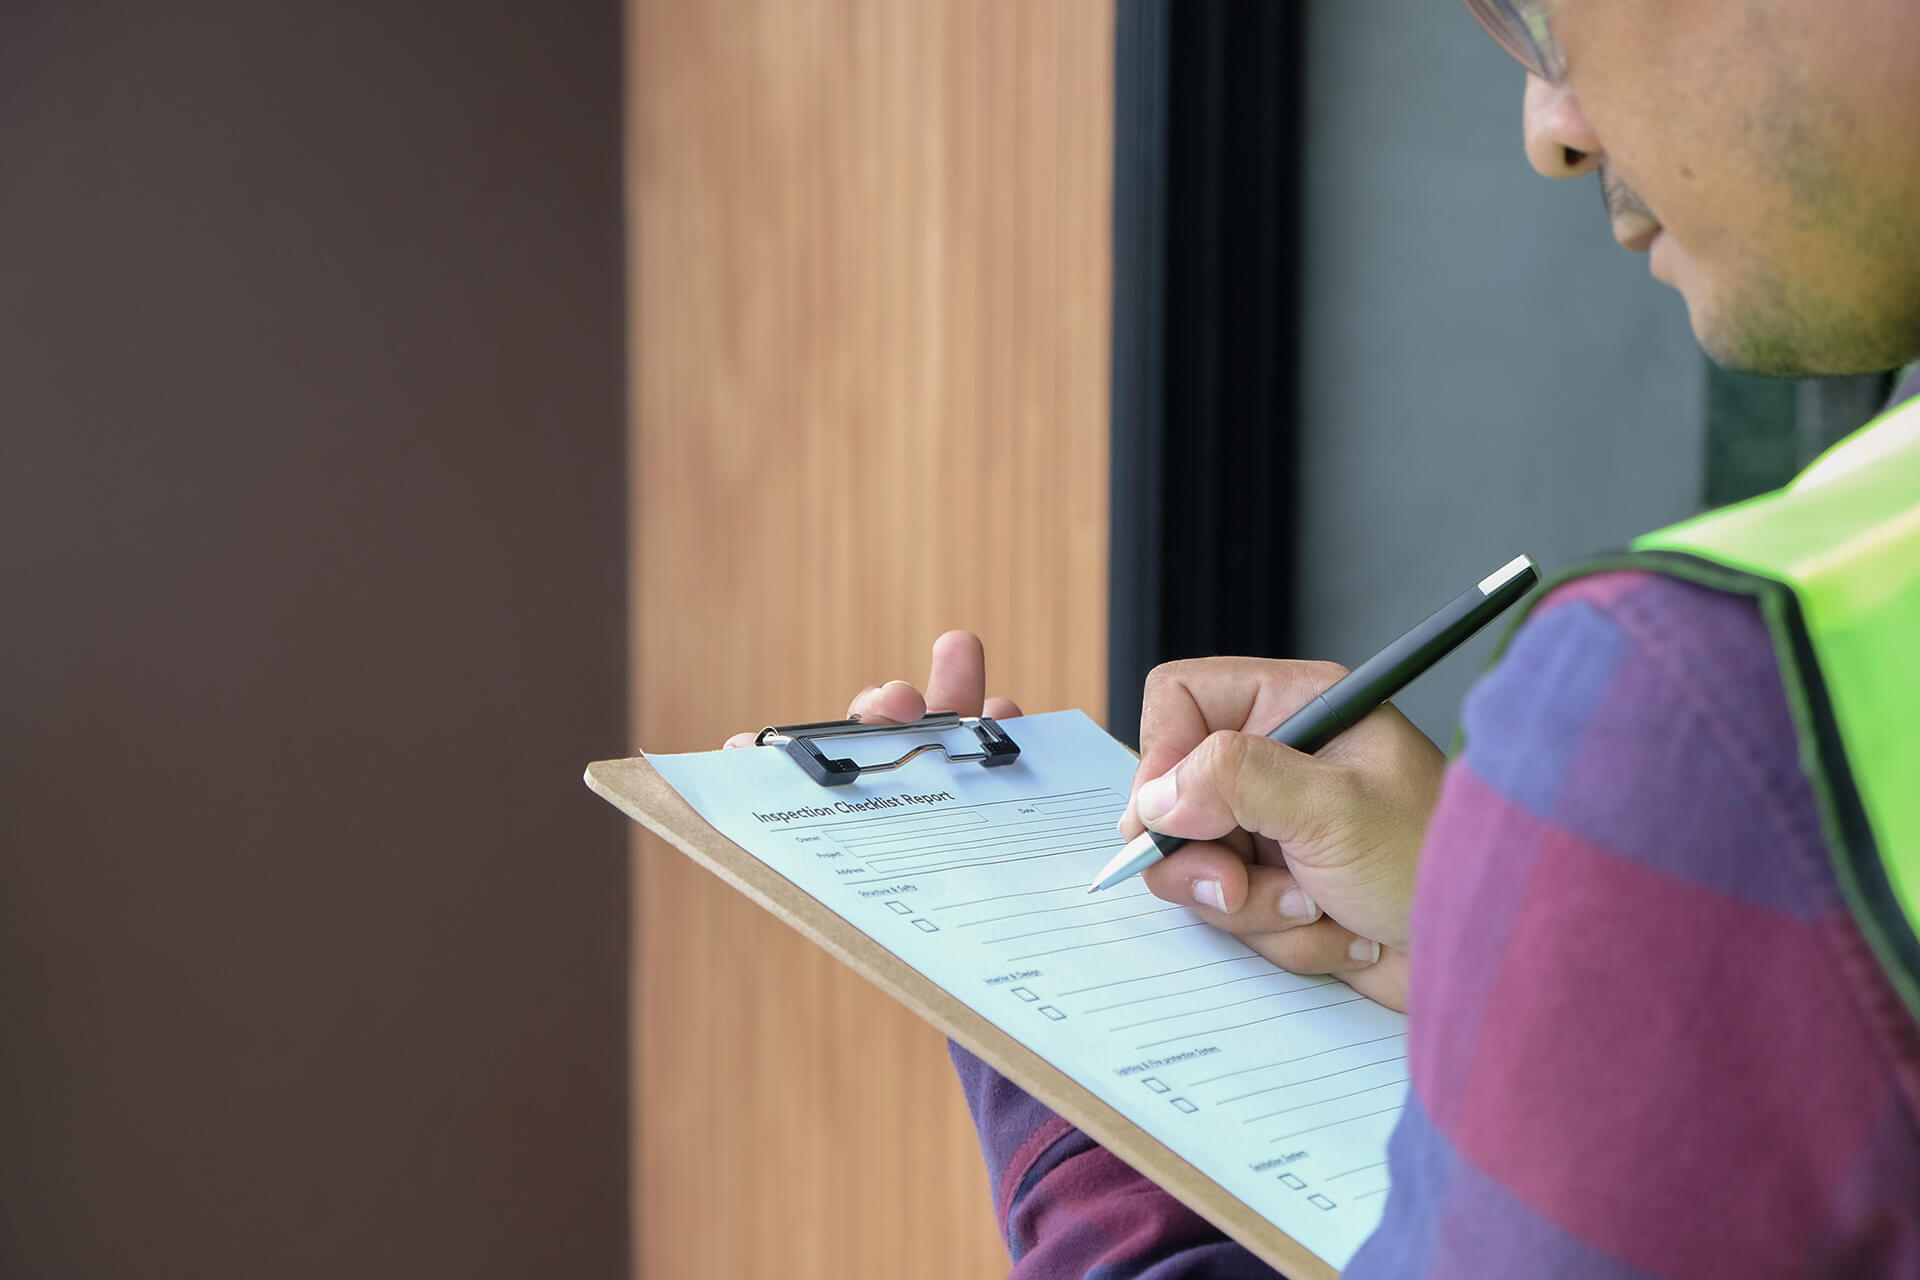 An employee fills out paperwork on a clipboard